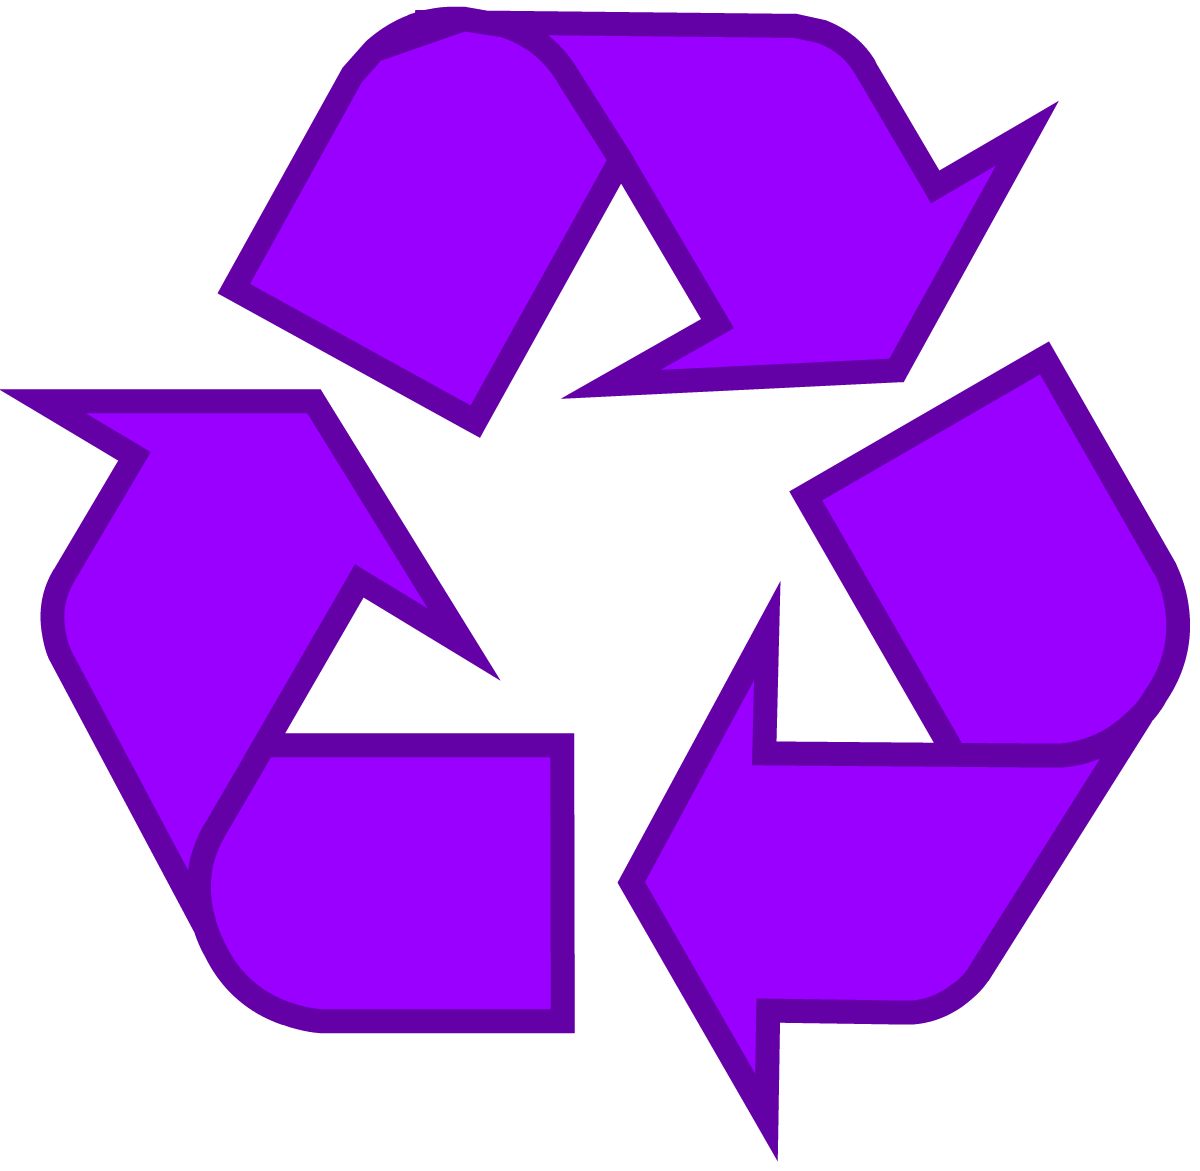 Orange Symbol Logo - Recycling Symbol - Download the Original Recycle Logo